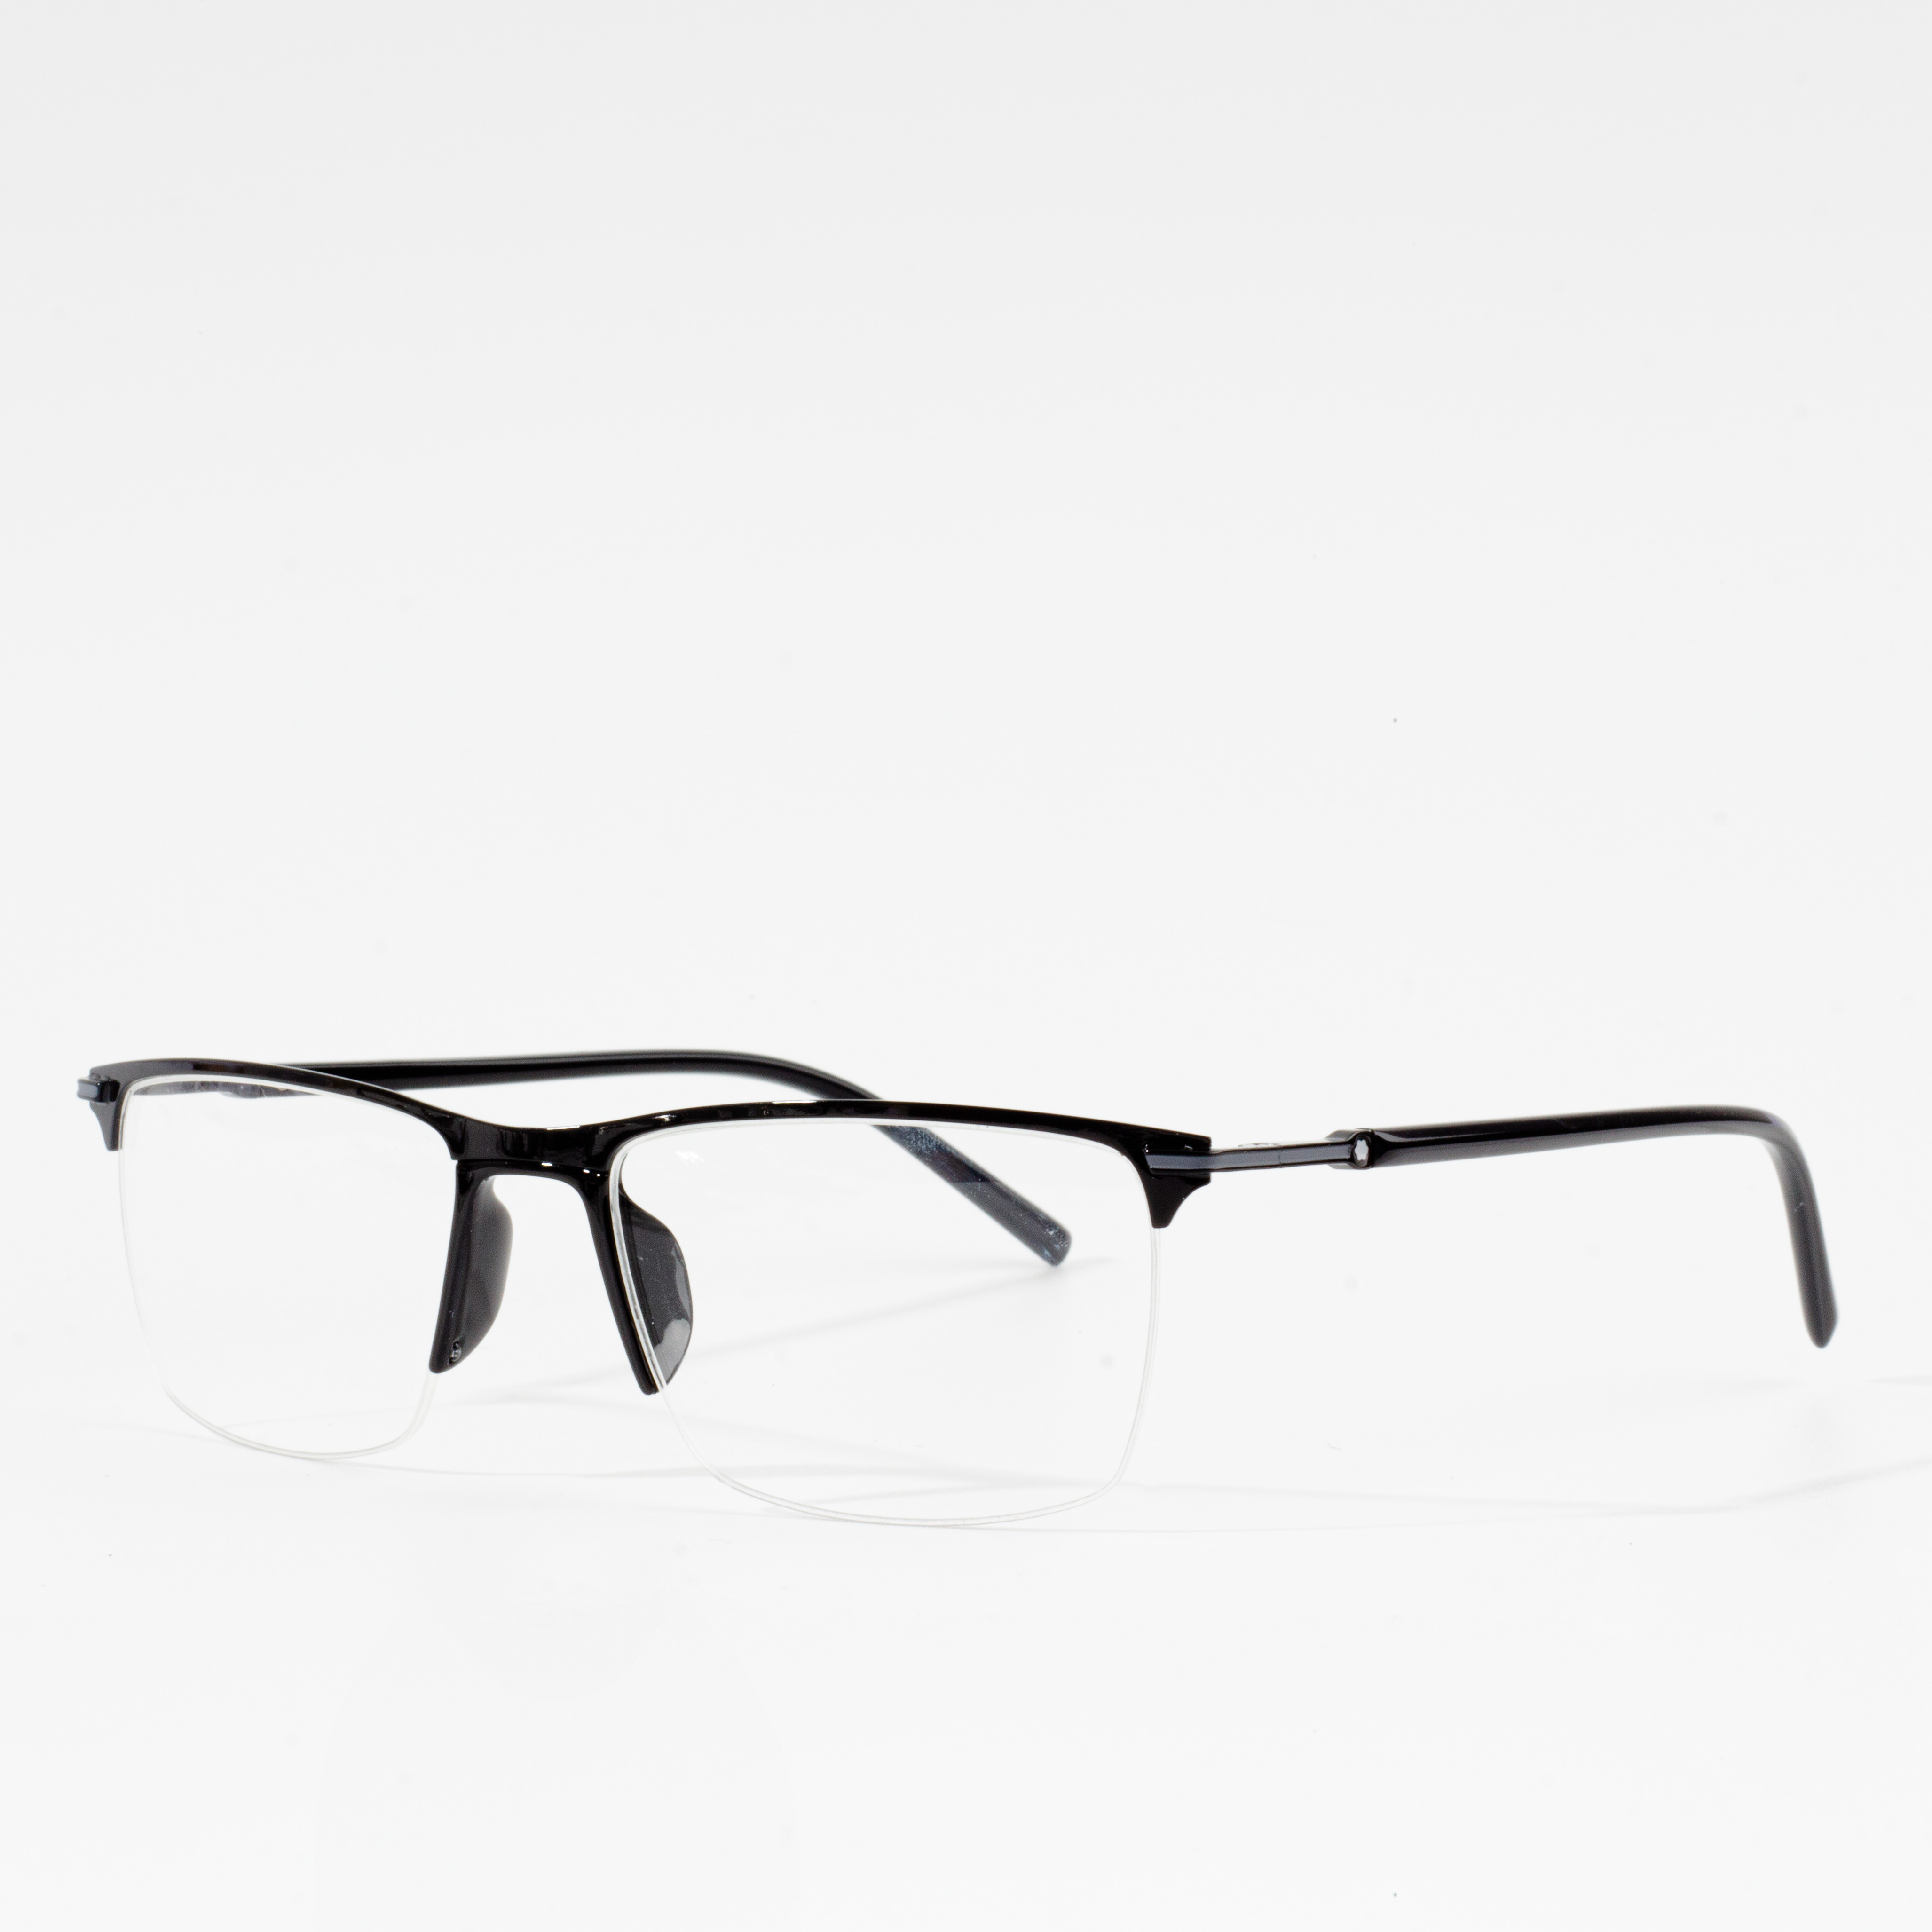 Sealladh Optical Eyeglasses Frames